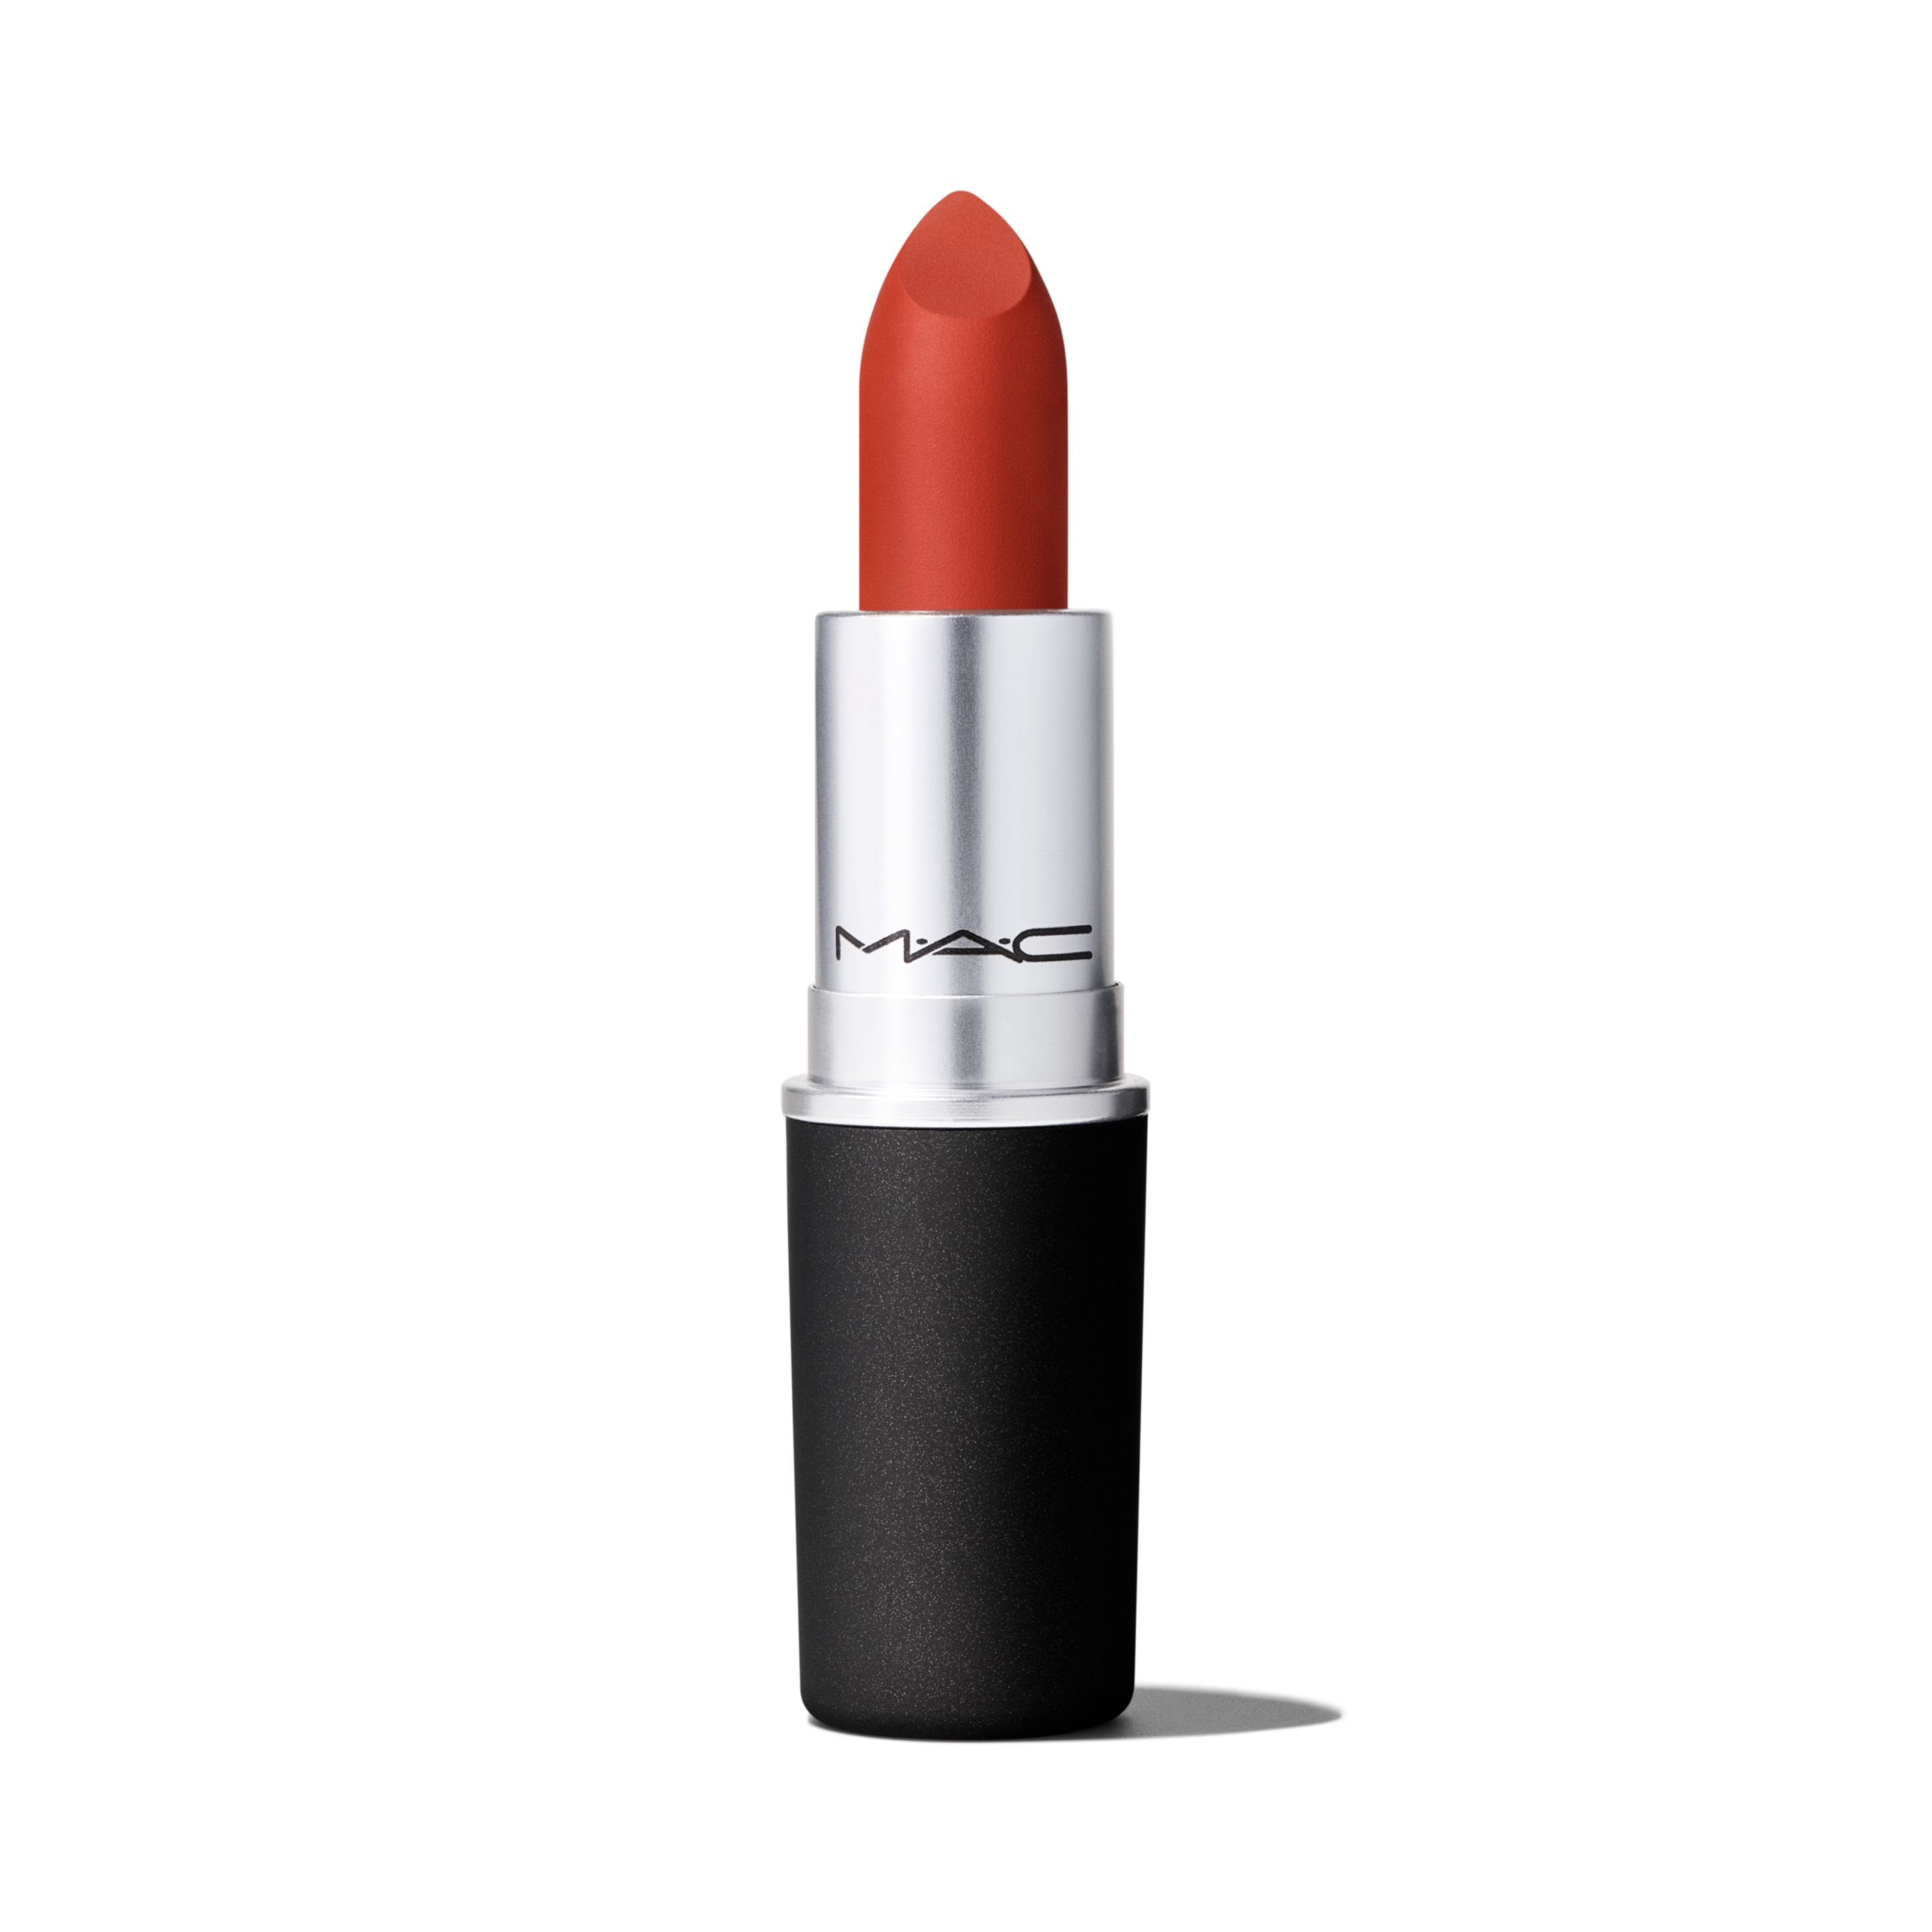 Помада для губ MAC Powder Kiss Lipstick увлажняющая, матовая, тон Devoted To Chili, 3 г architectural guide chili